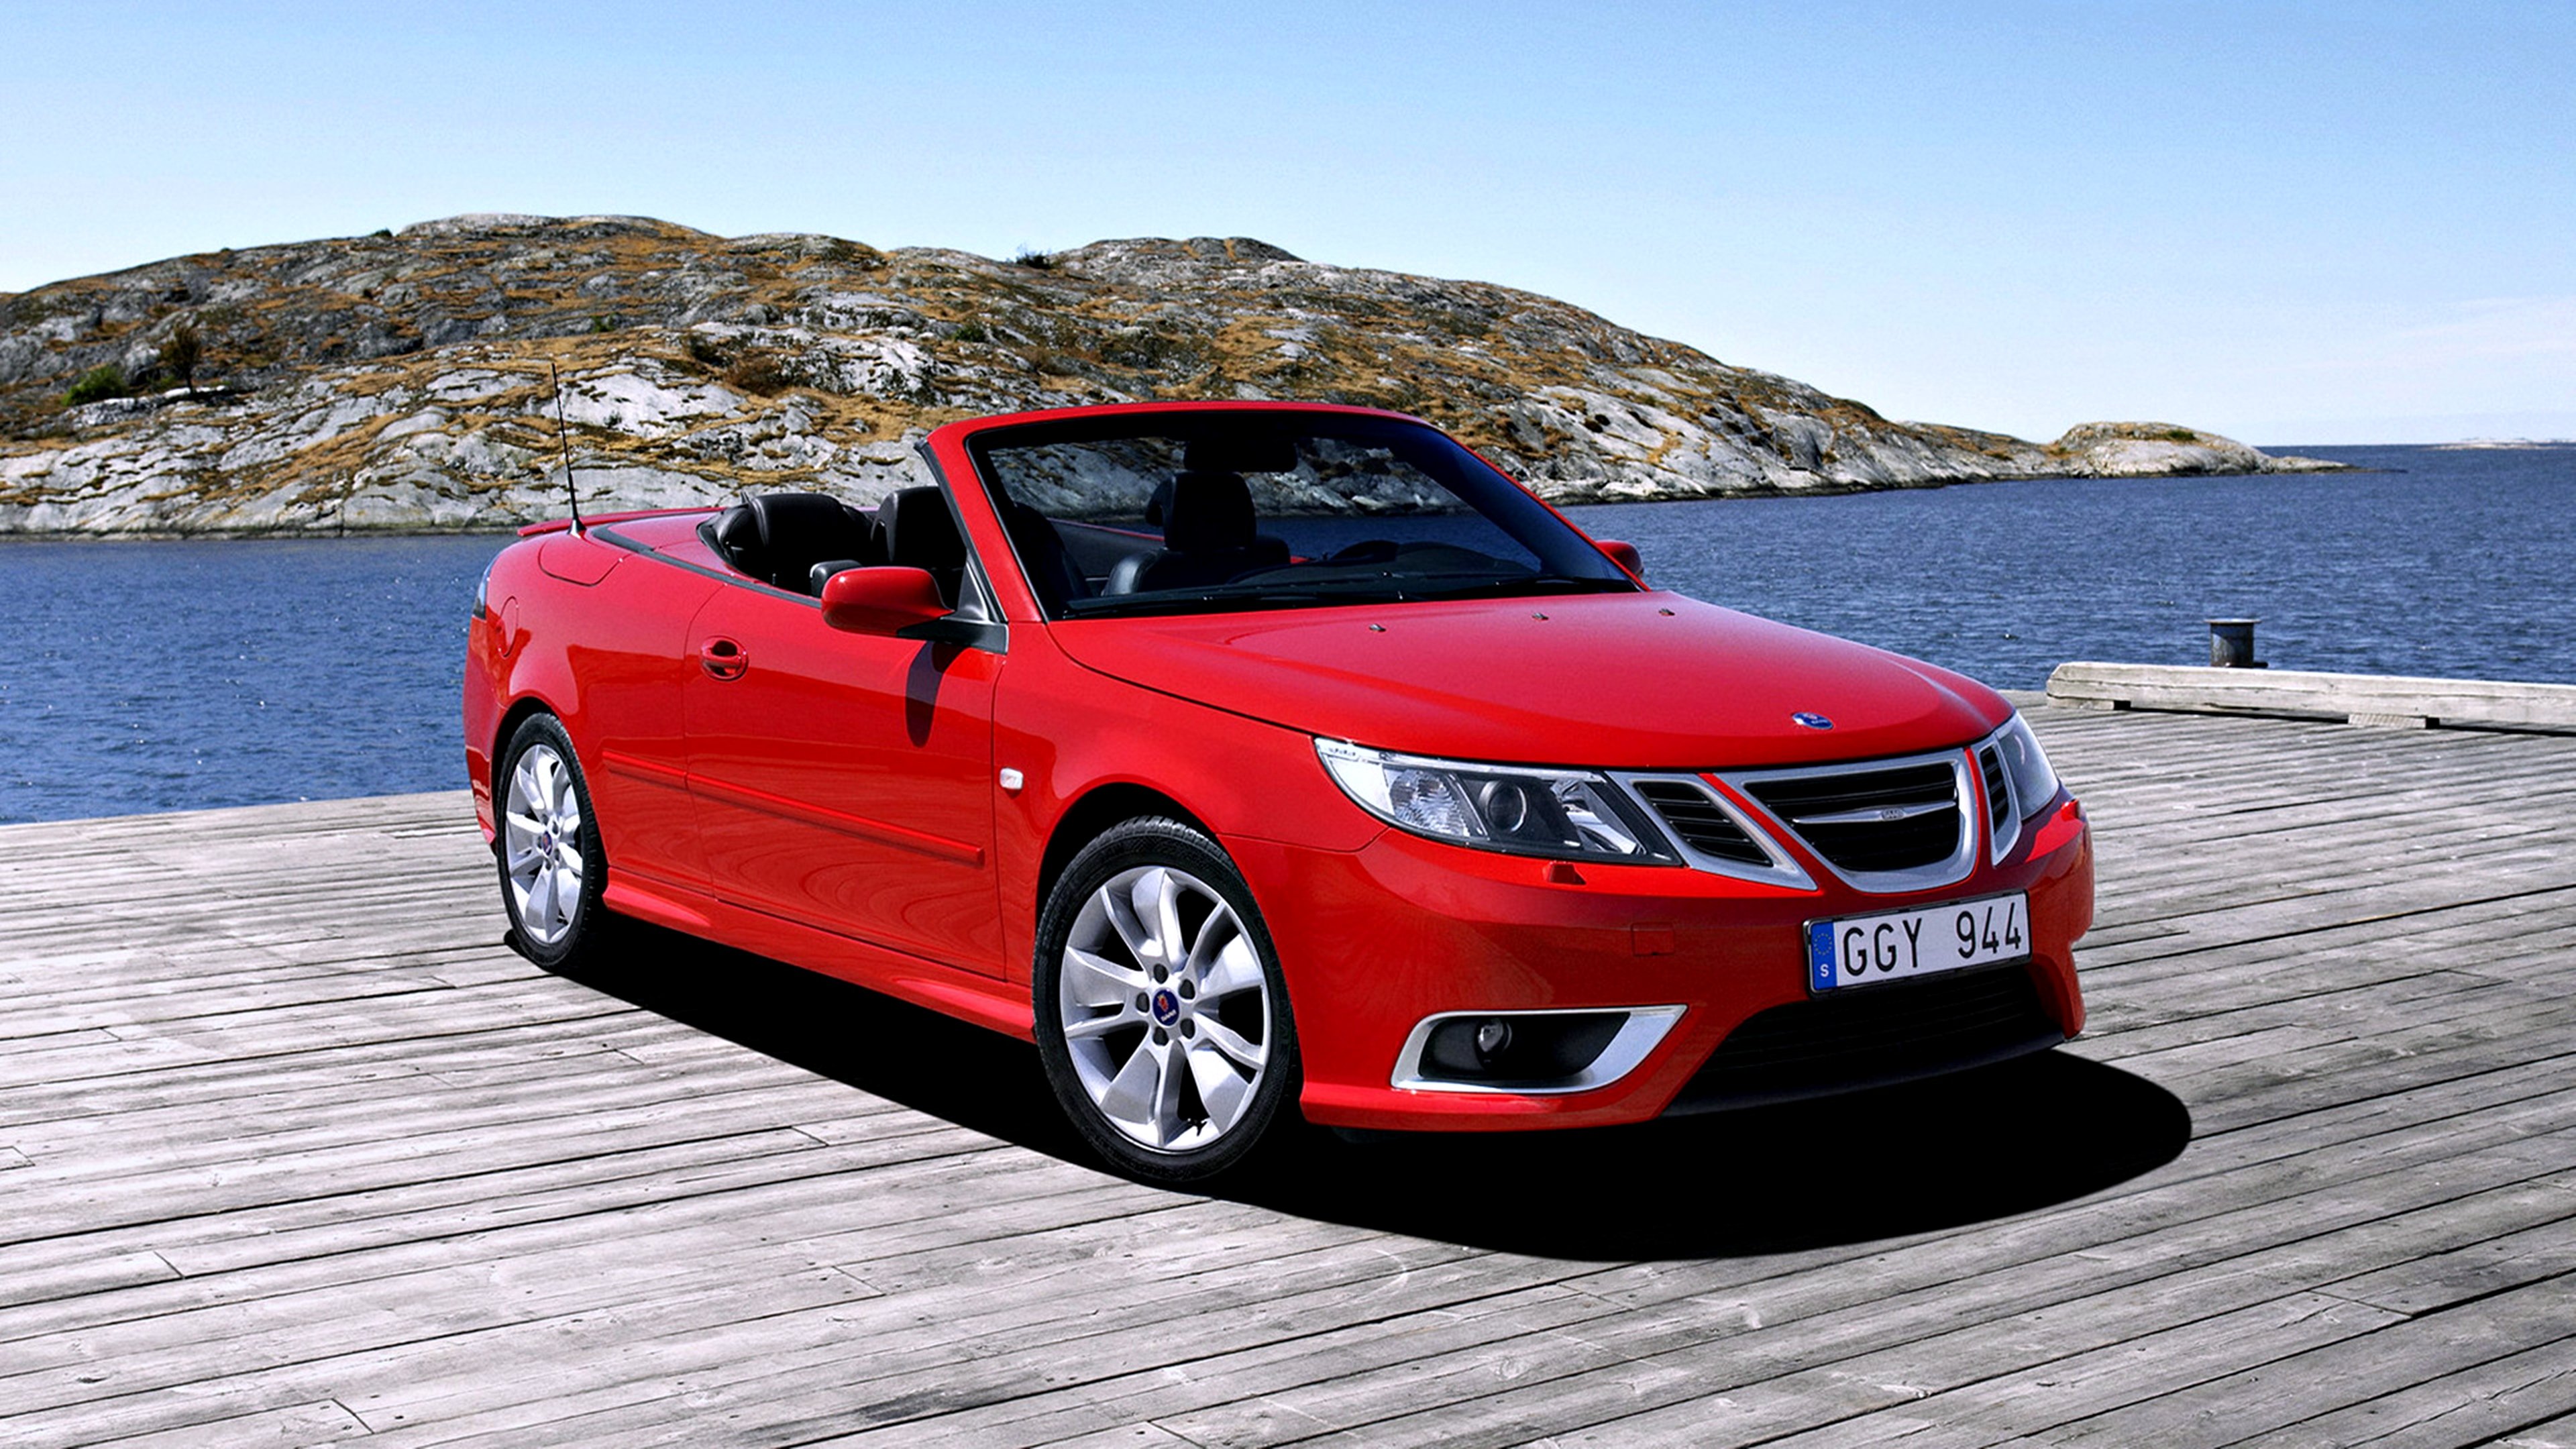 2008, Saab, 9 3, Aero, Convertible, Red, Sea, Speed, Roof, Landscape, Motors, Cars Wallpaper